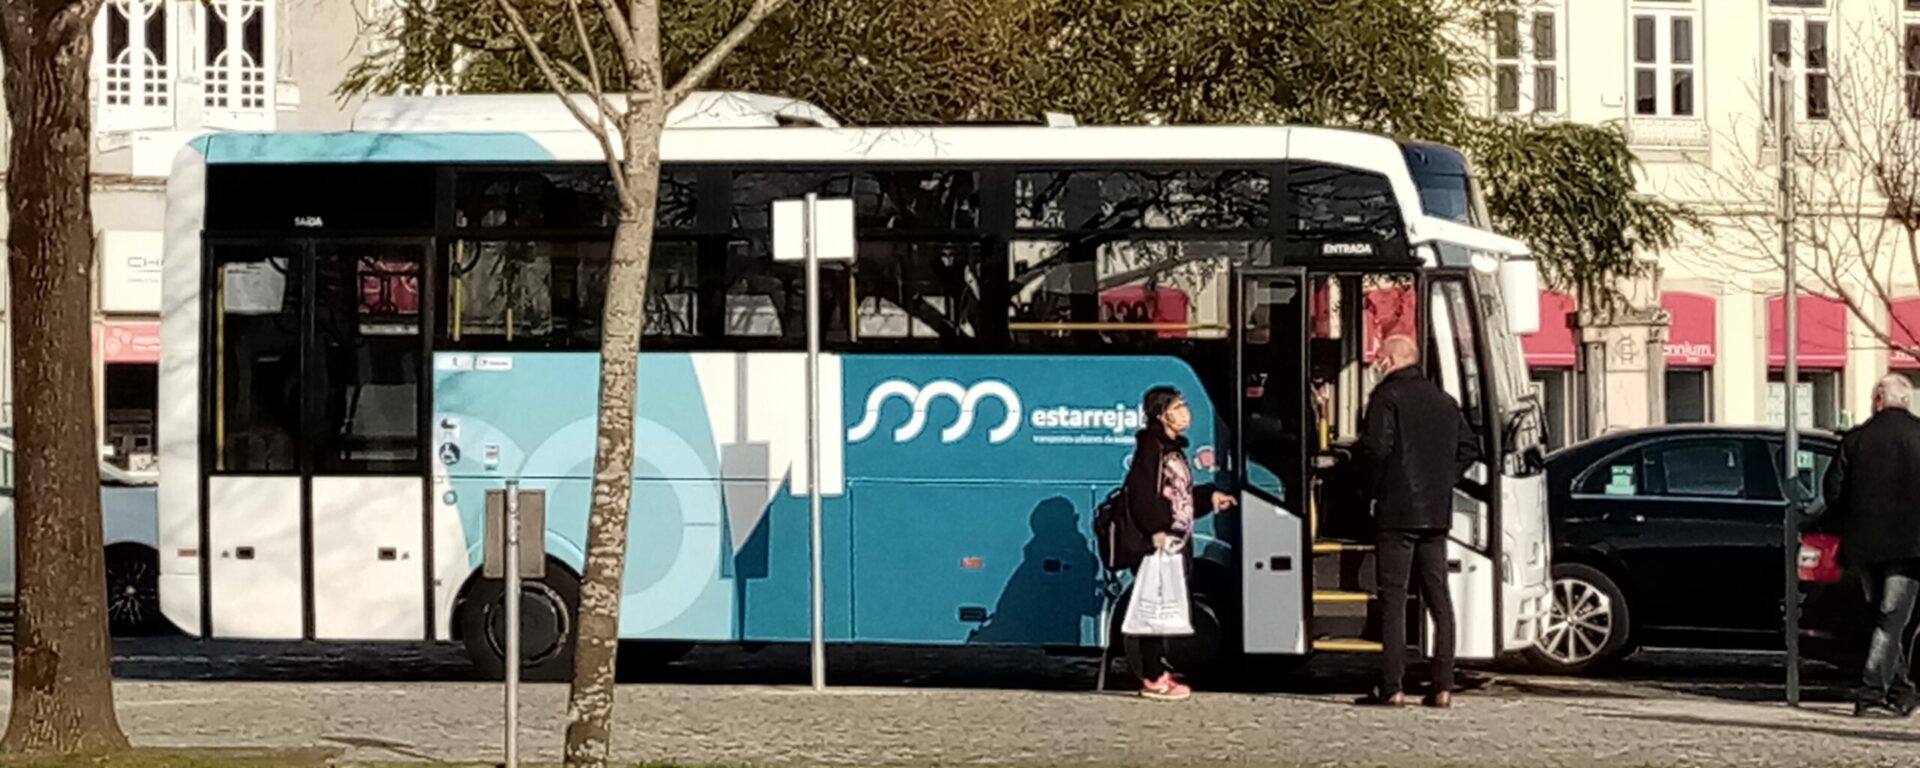 New transit services by Transdev shorten distances in Estarreja in Portugal